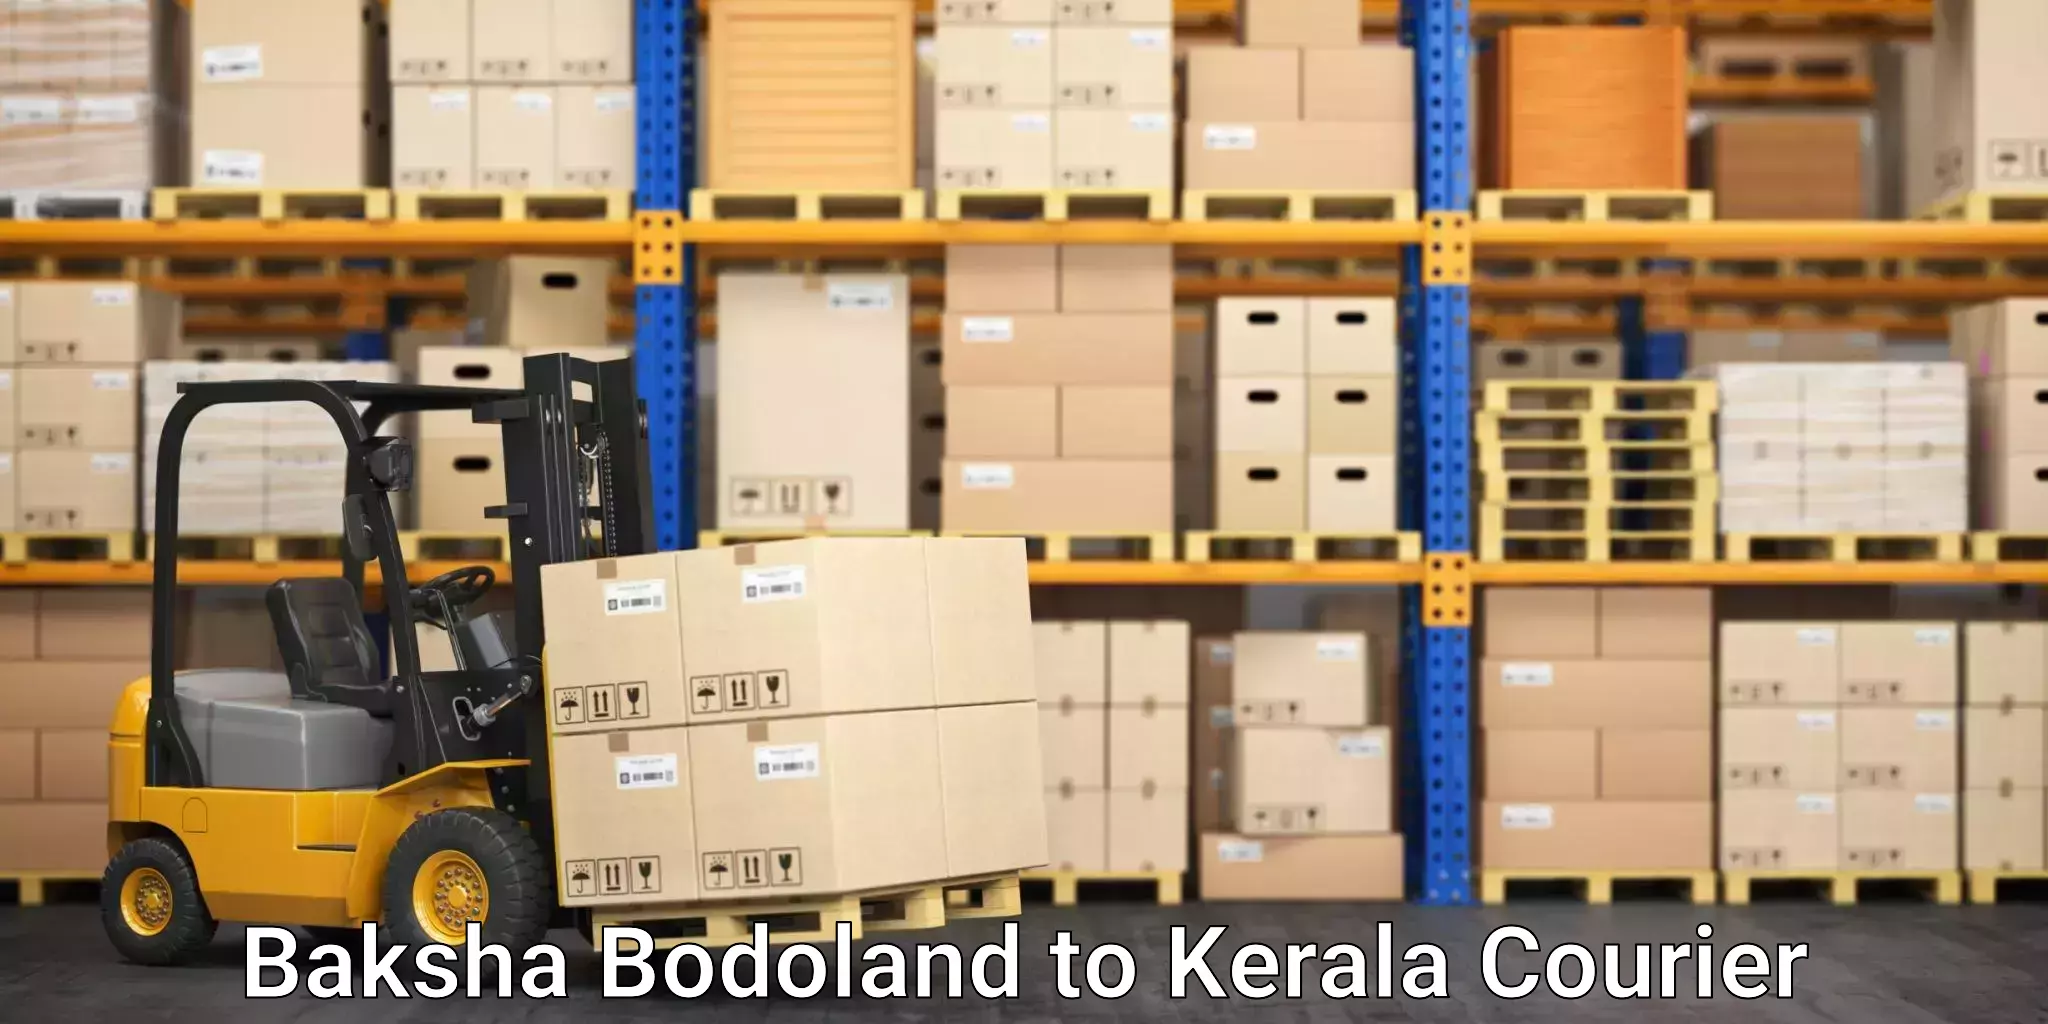 Tech-enabled shipping in Baksha Bodoland to Cochin Port Kochi